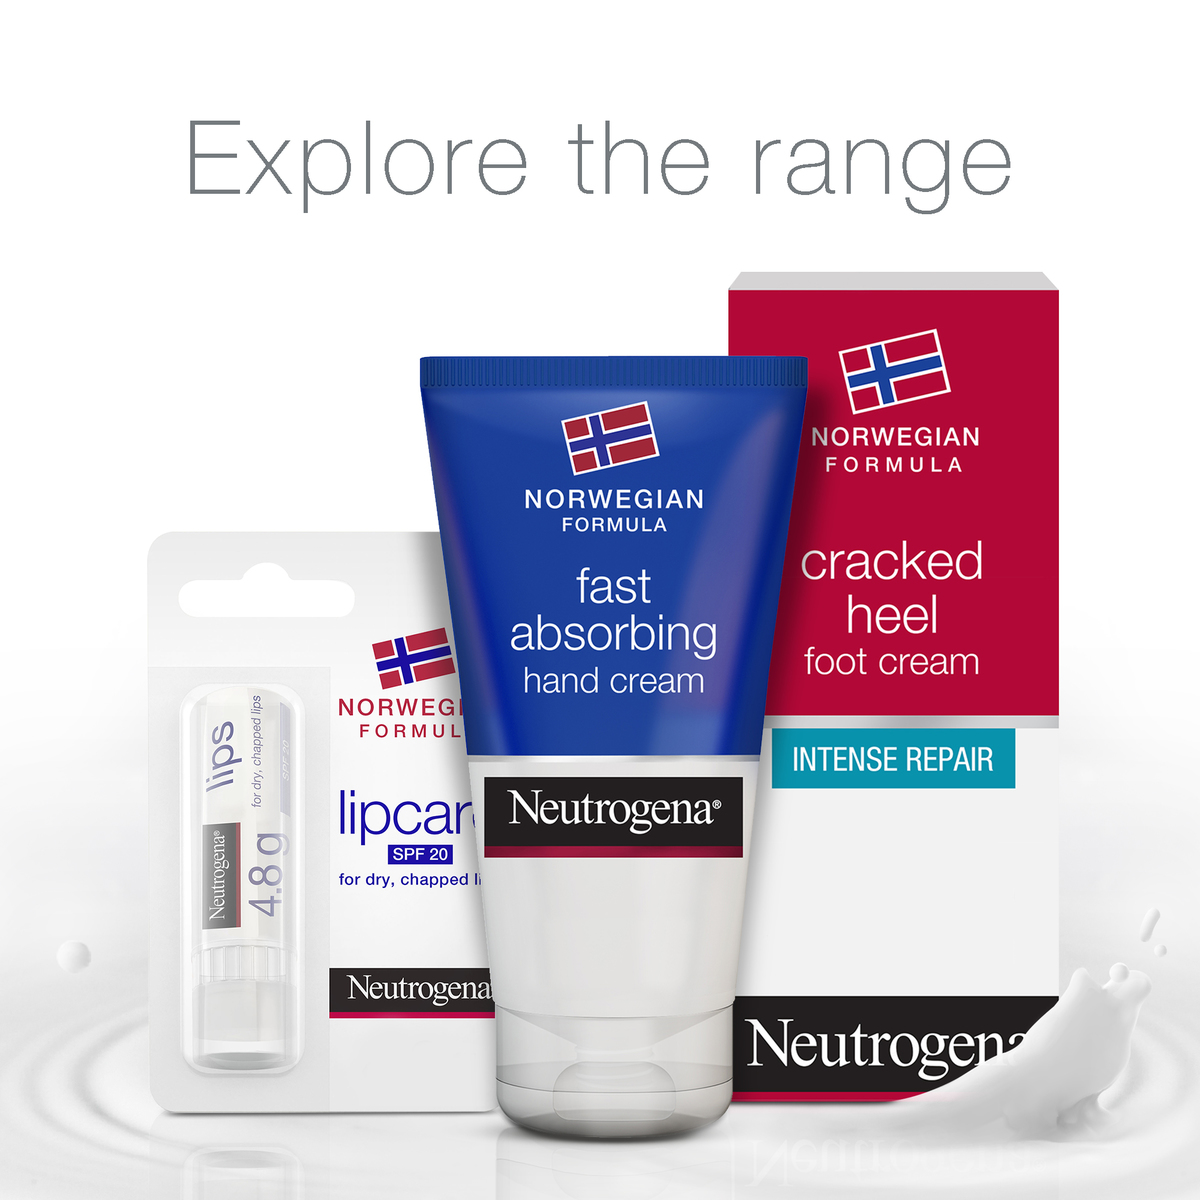 Neutrogena Foot Cream Norwegian Formula Cracked Heel Intense Re pair 50 ml